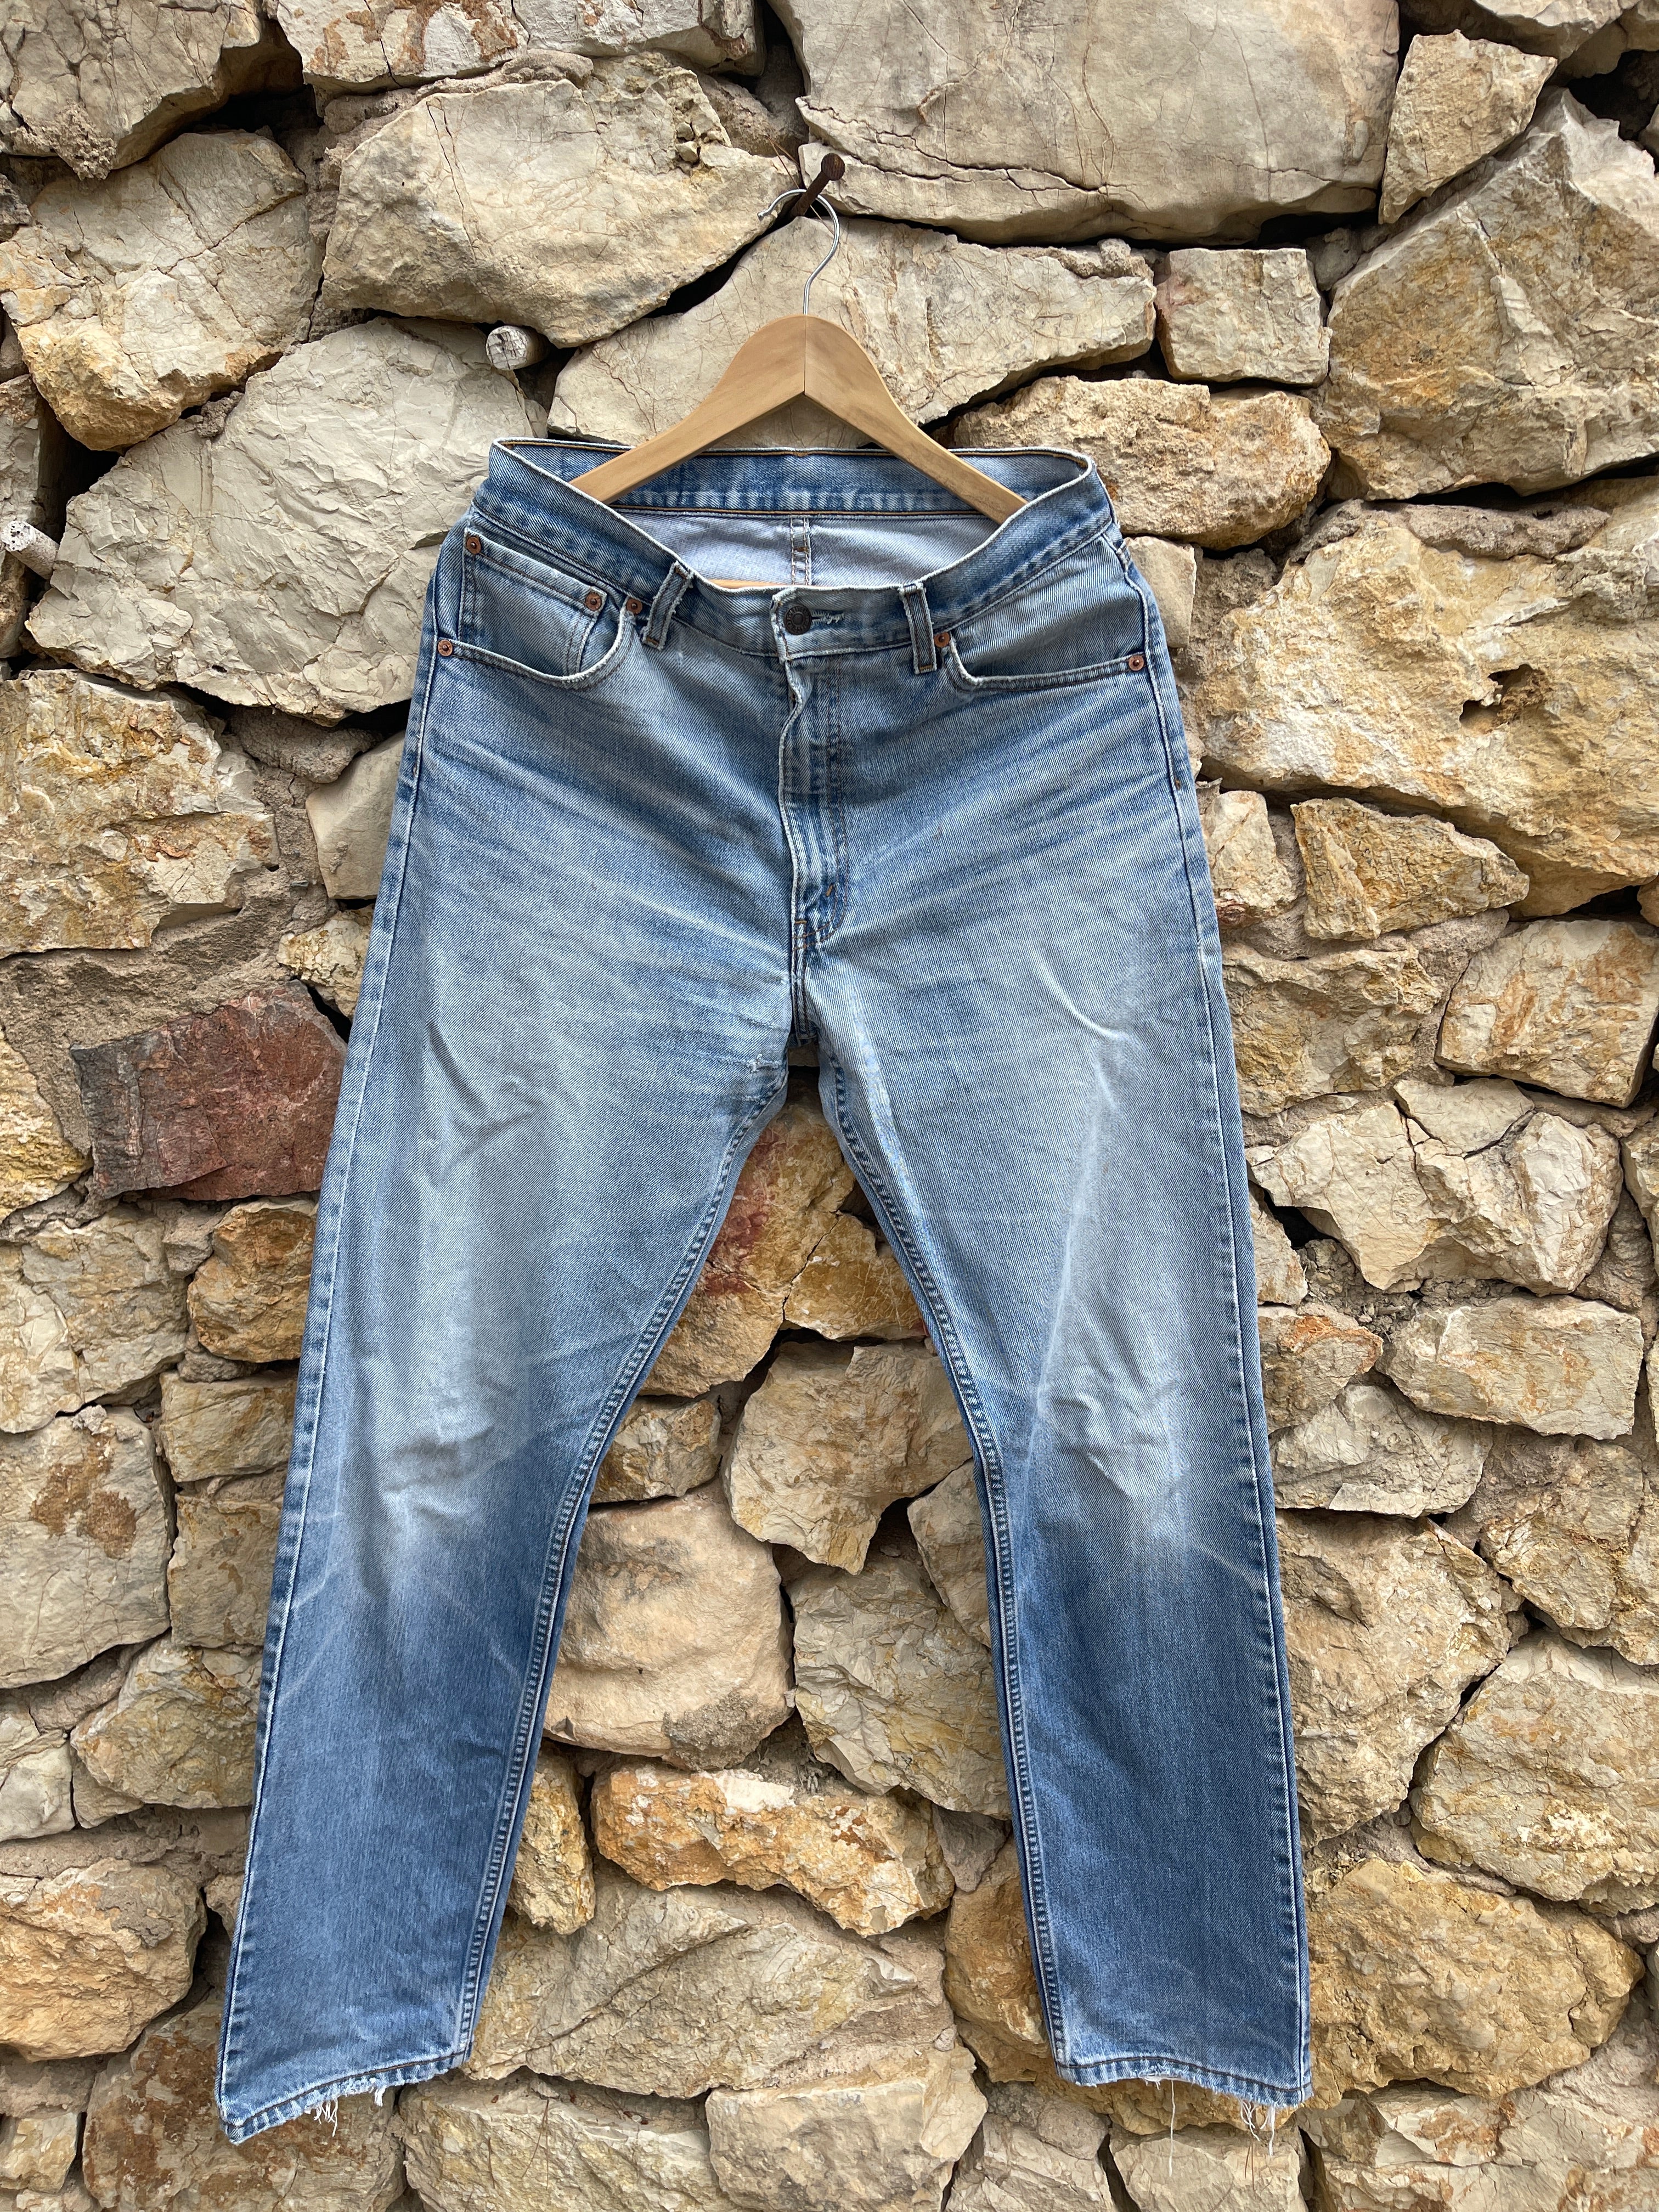 Reworked unisex Levis jeans.